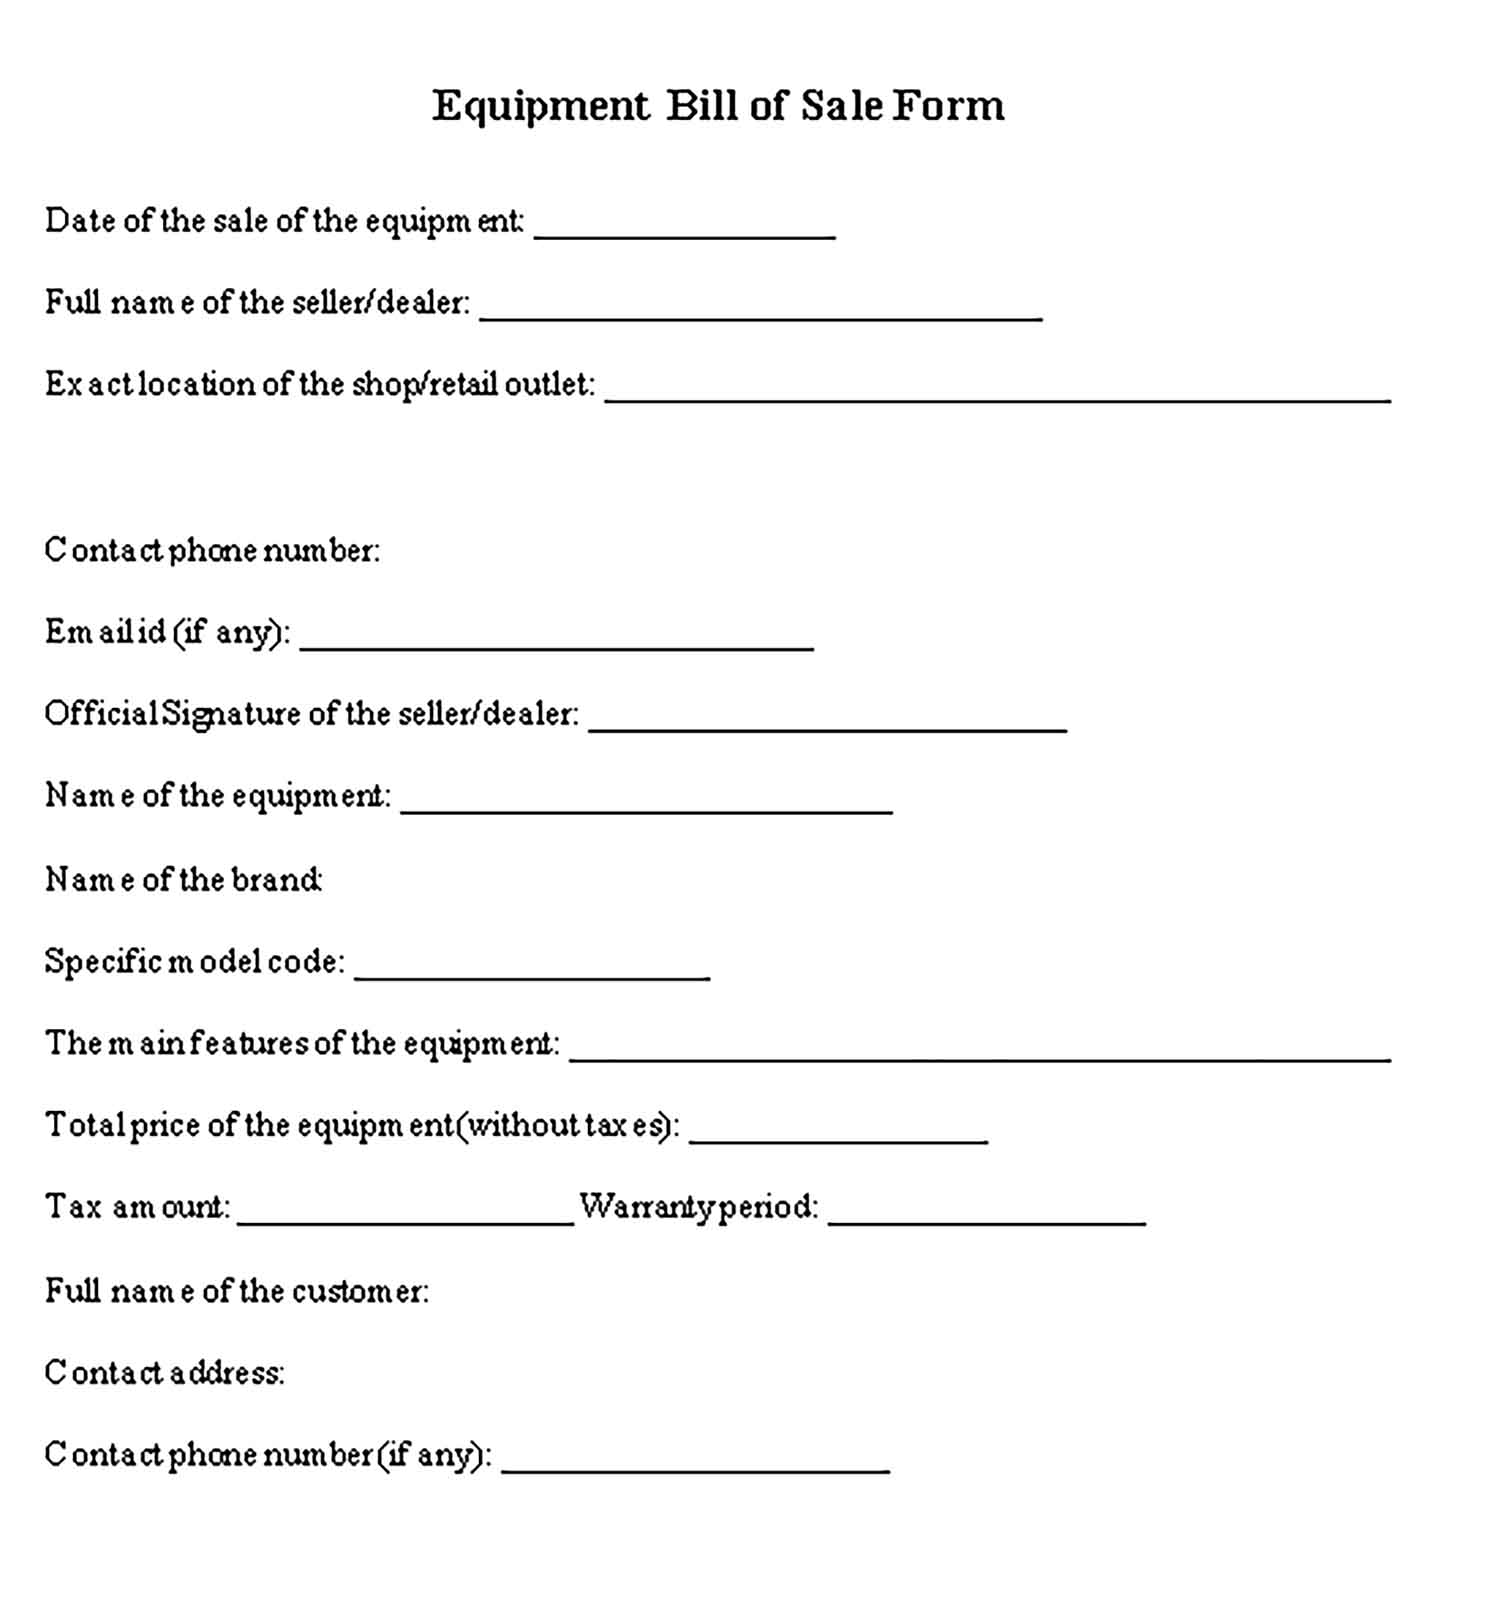 Sample Equipment Bill of Sale Form Printable Templates